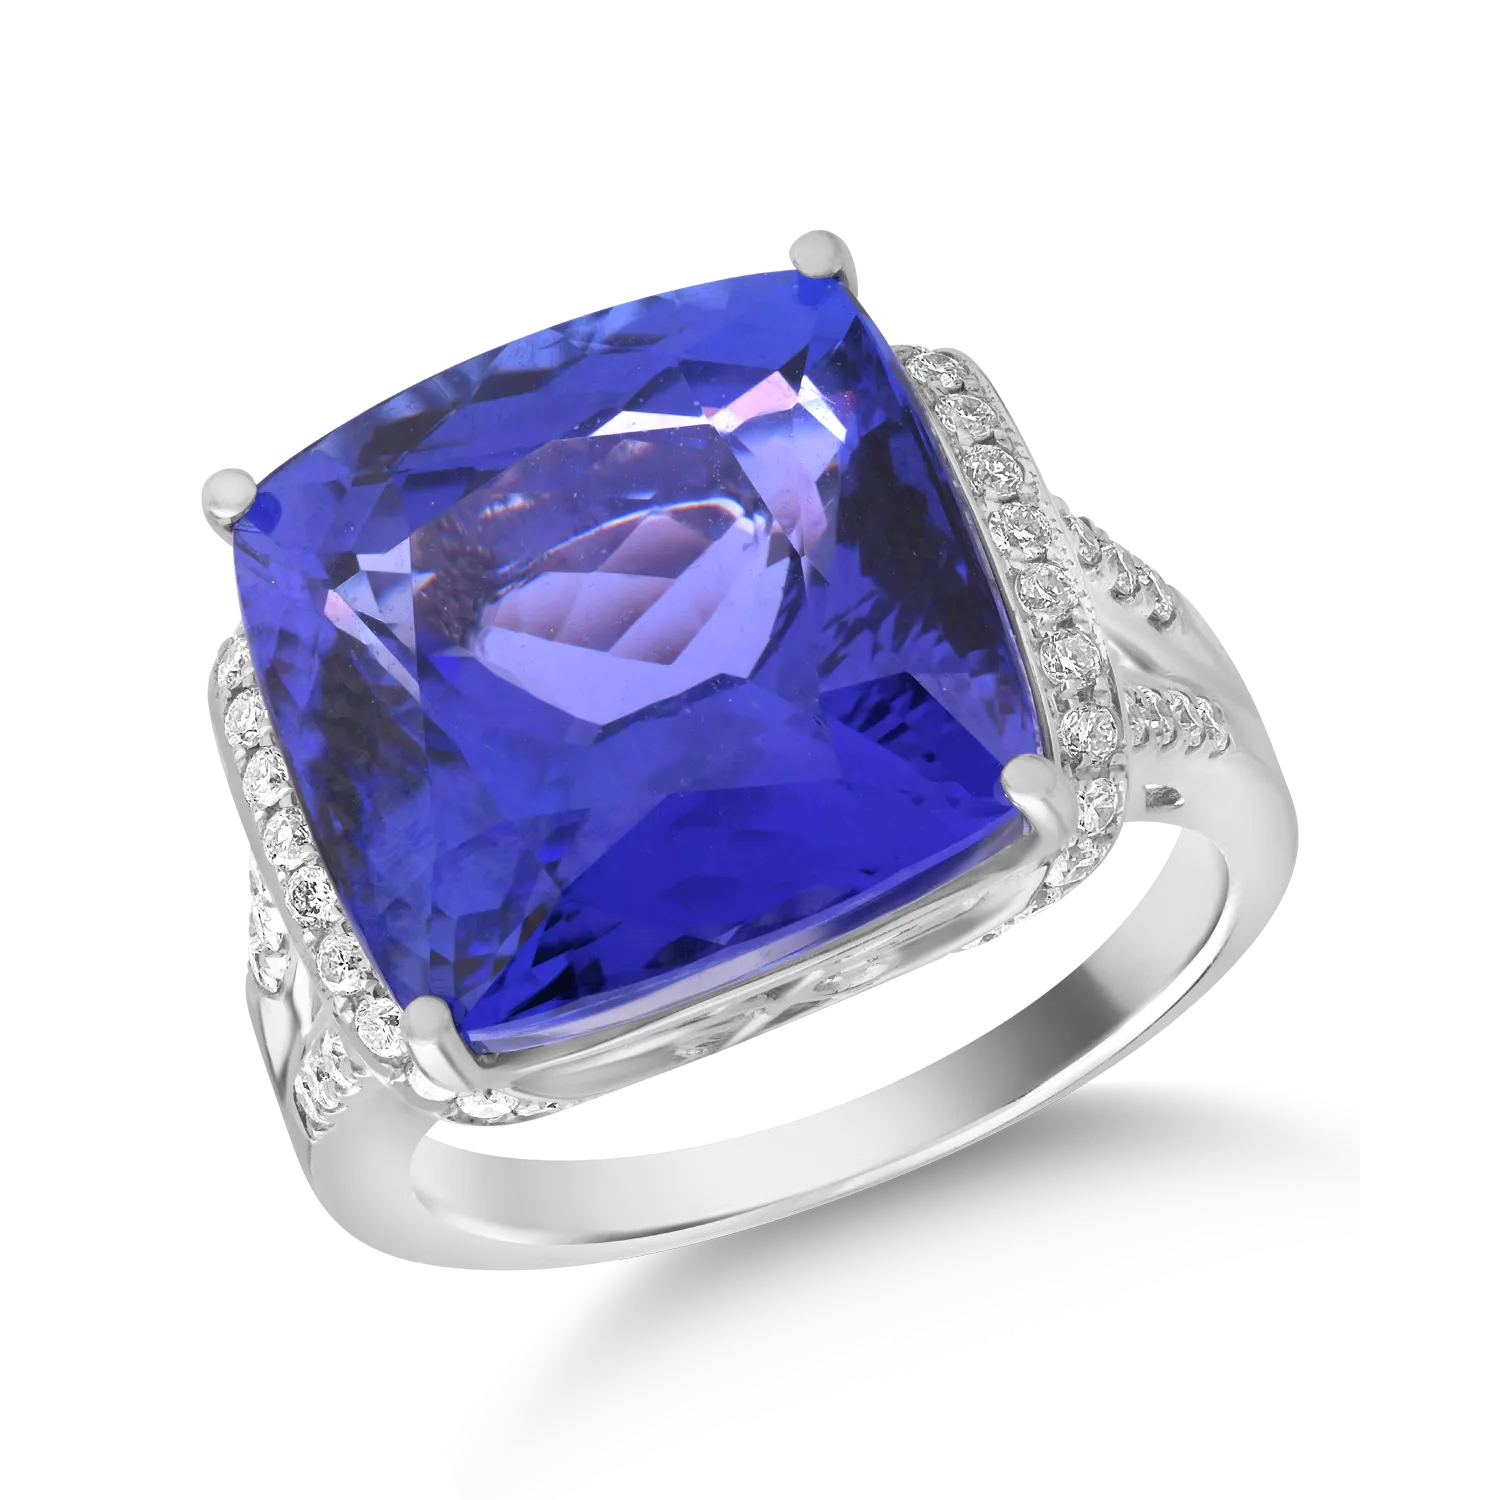 18K white gold ring with 14.15ct tanzanite and 0.5ct diamonds